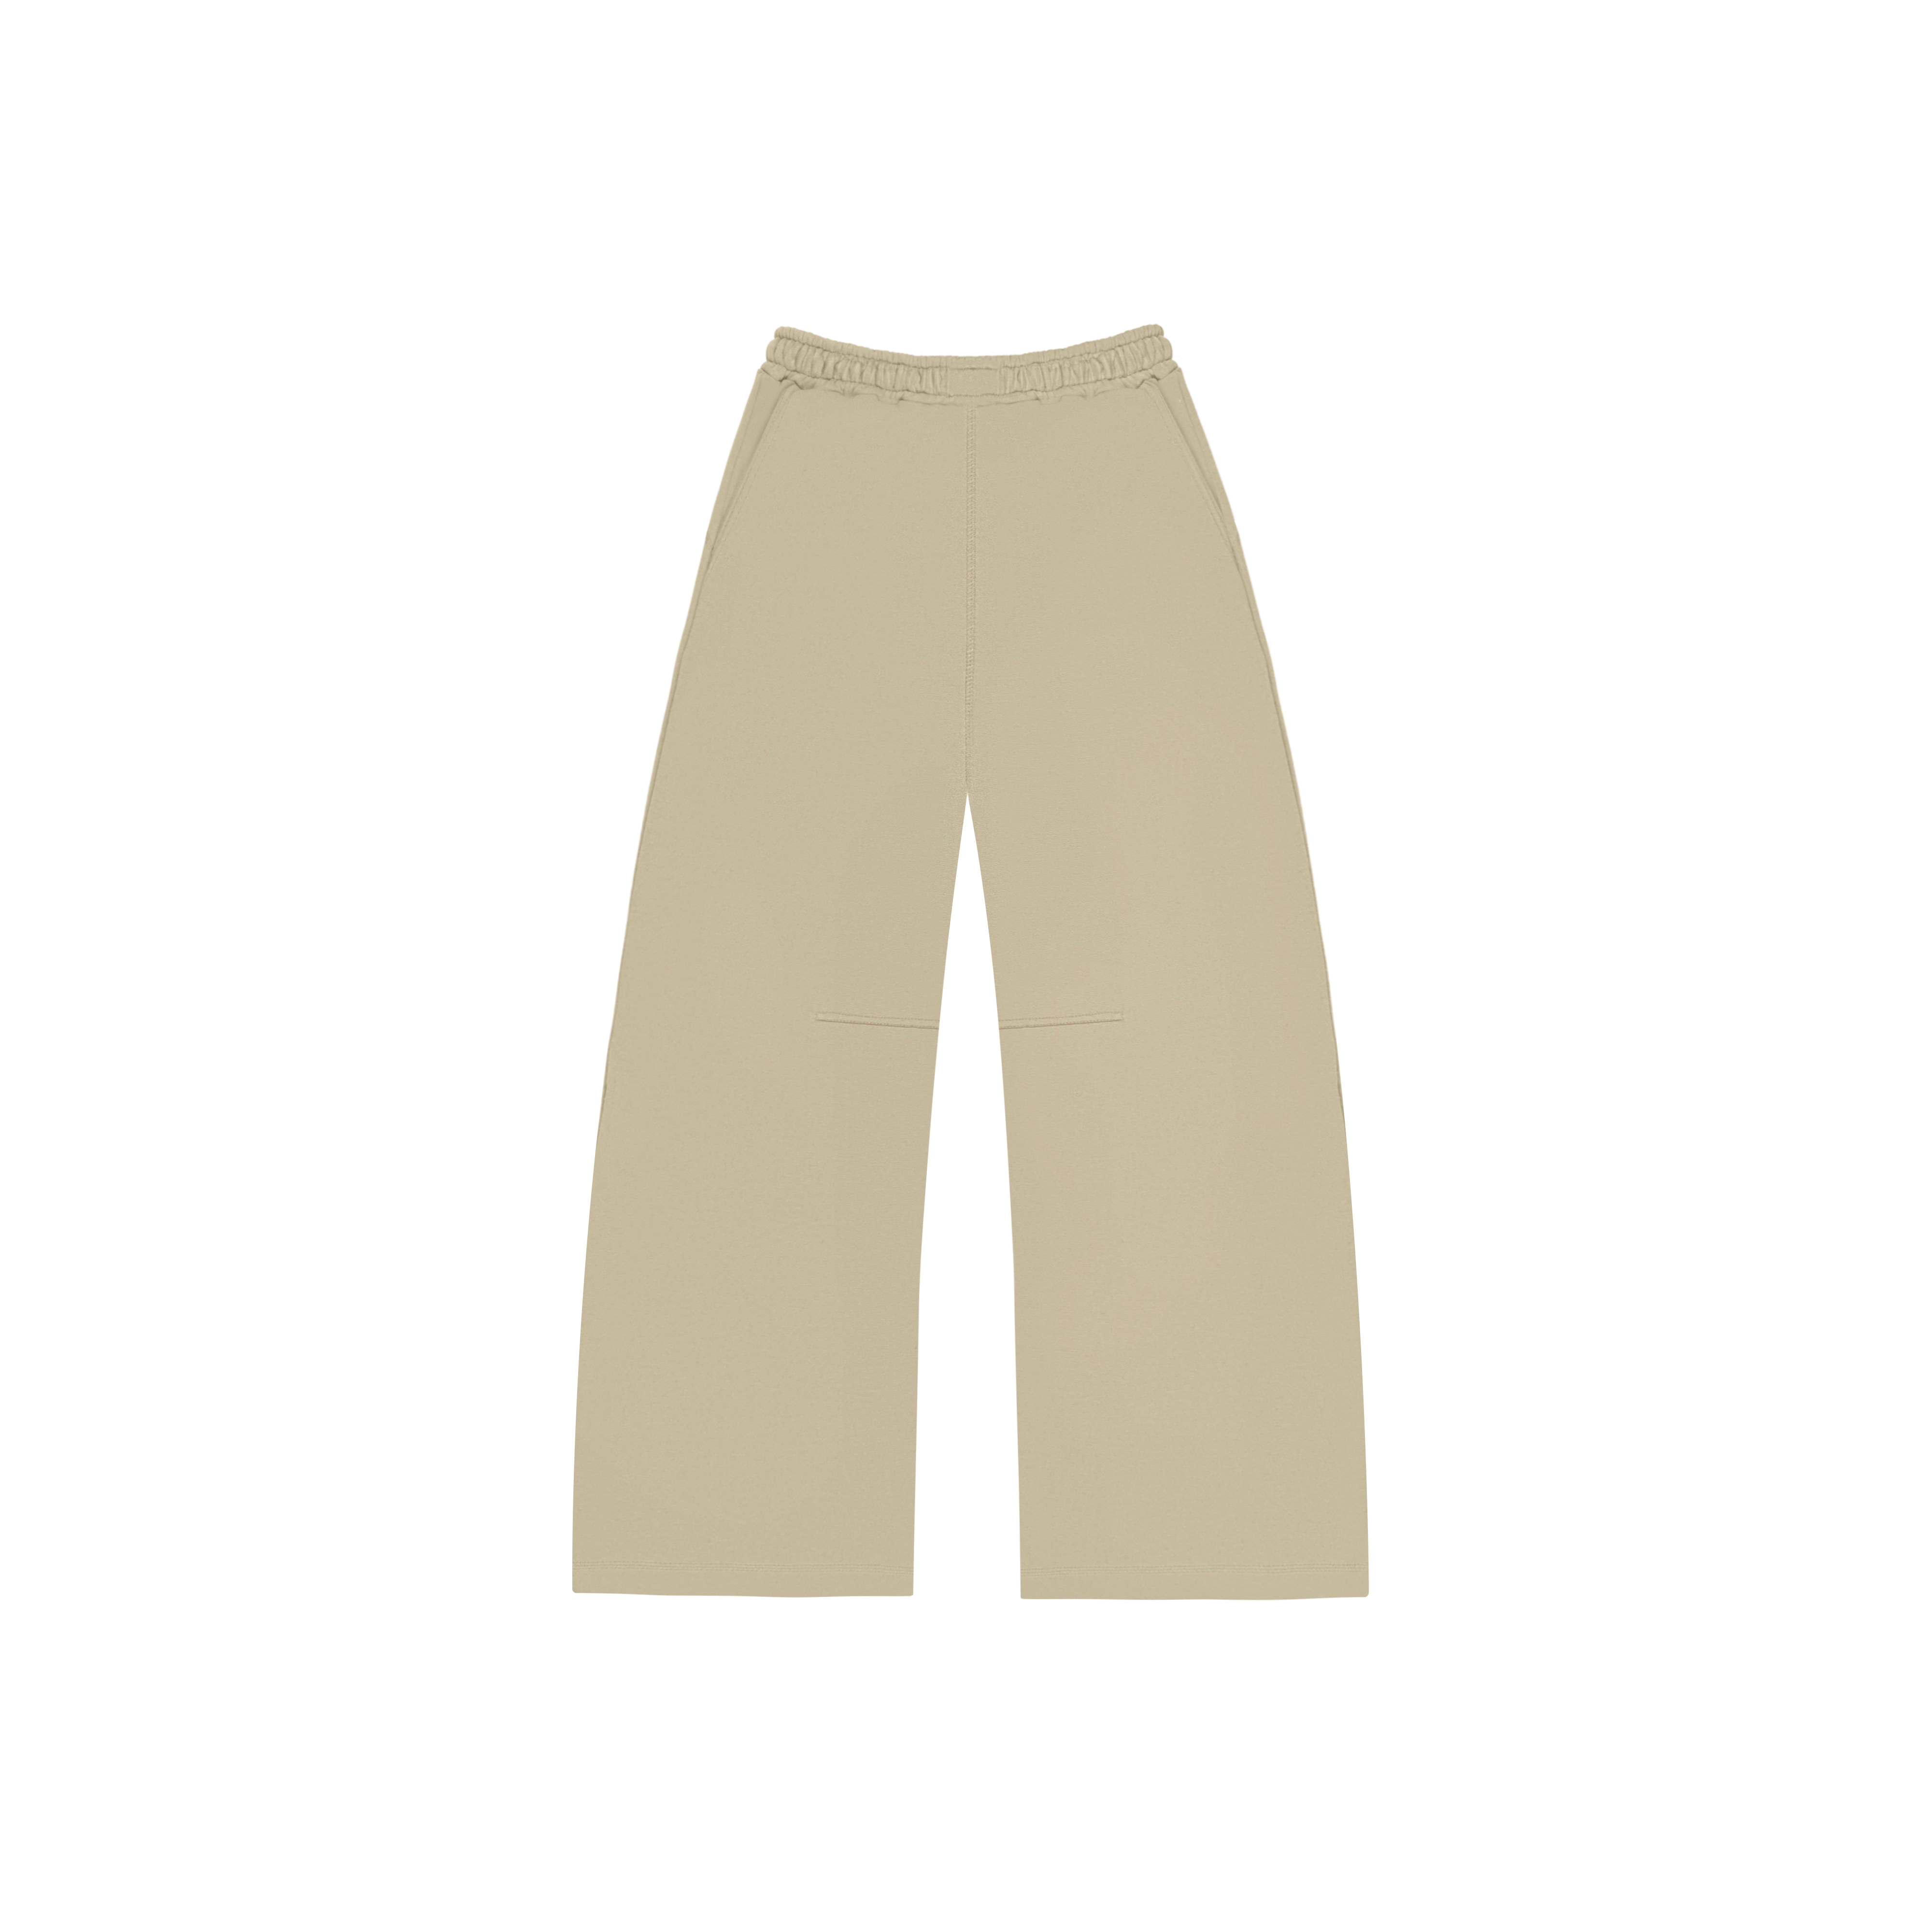 Kasha Arch Pants